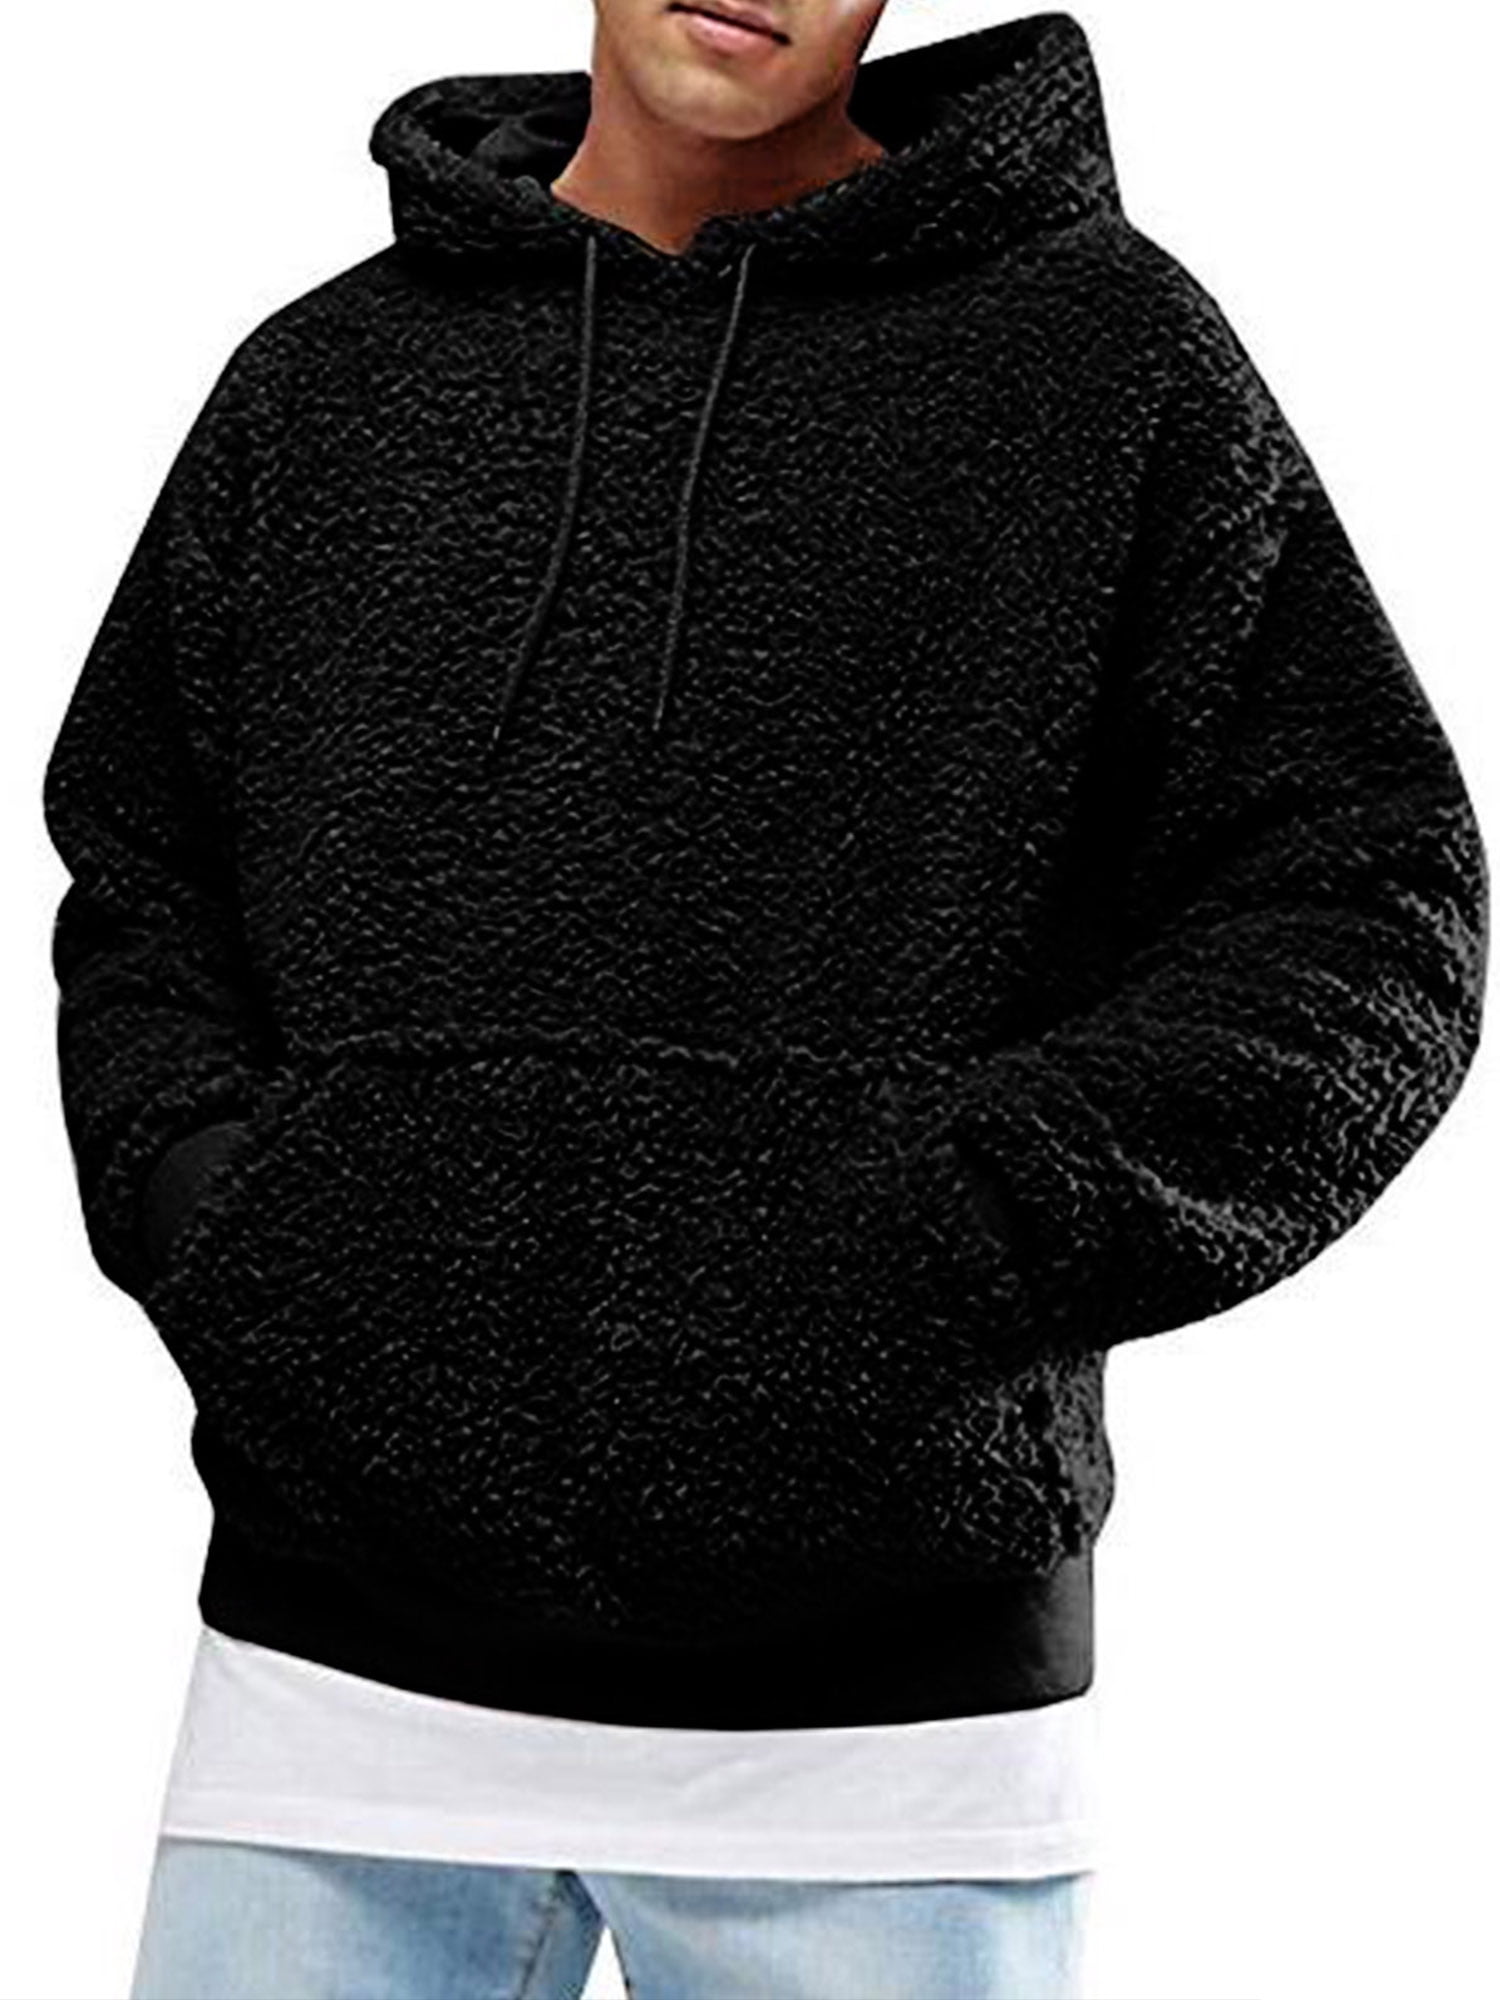 JYYYBF Mens Fuzzy Pullover Hoodie Sherpa Sweatshirt Long Sleeve Fall Winter  Hooded Outwear with Pocket Dark Green S 